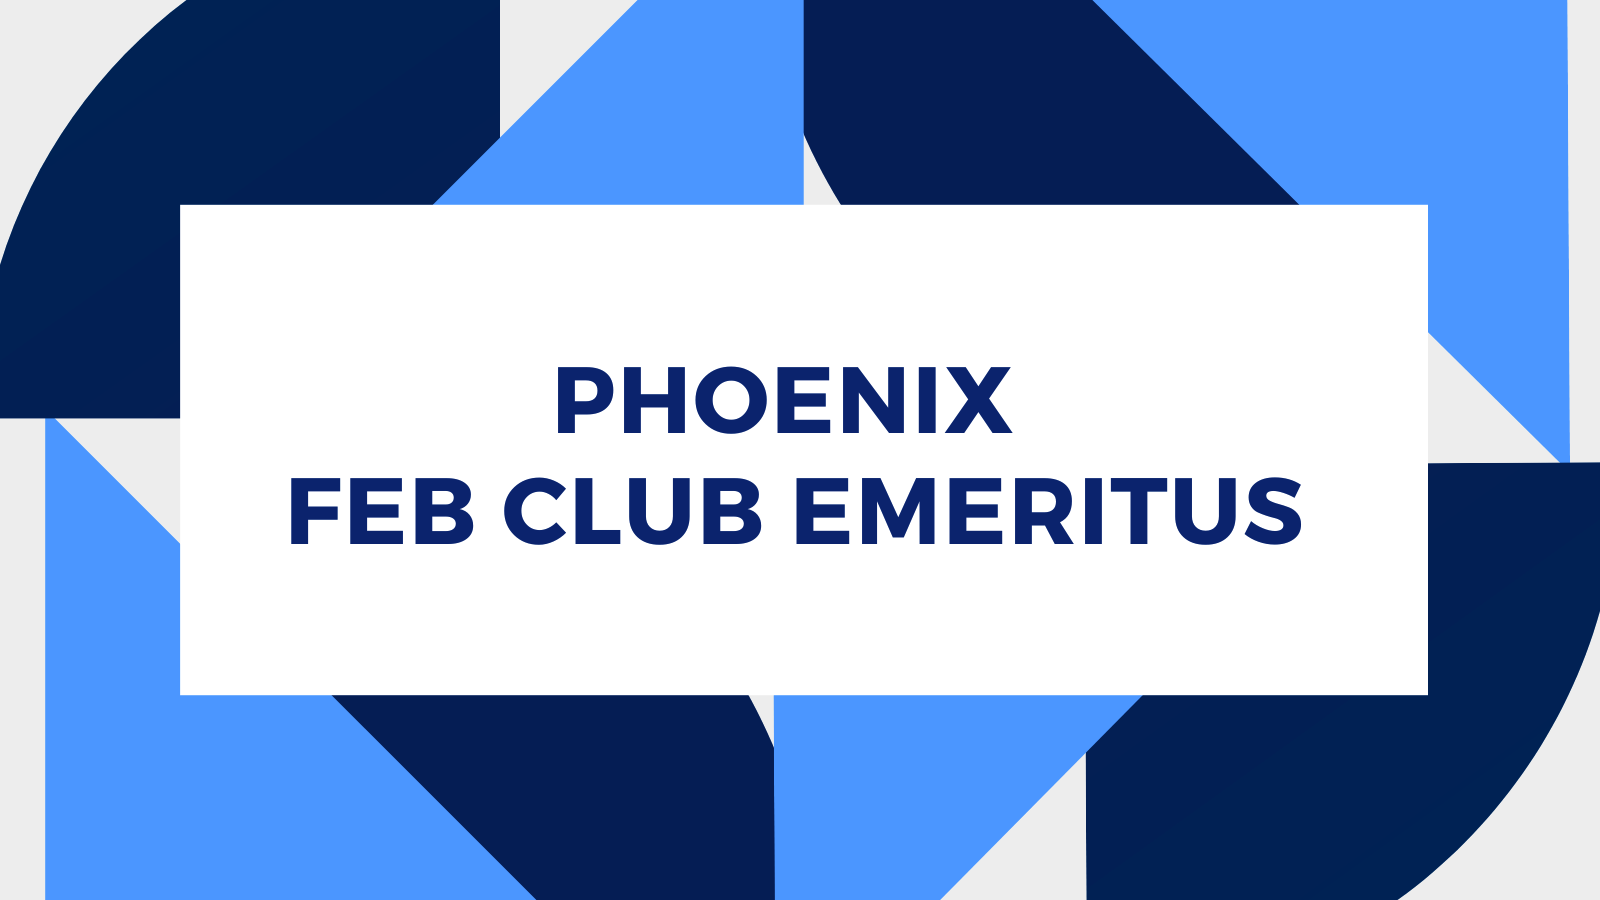 Phoenix Feb Club